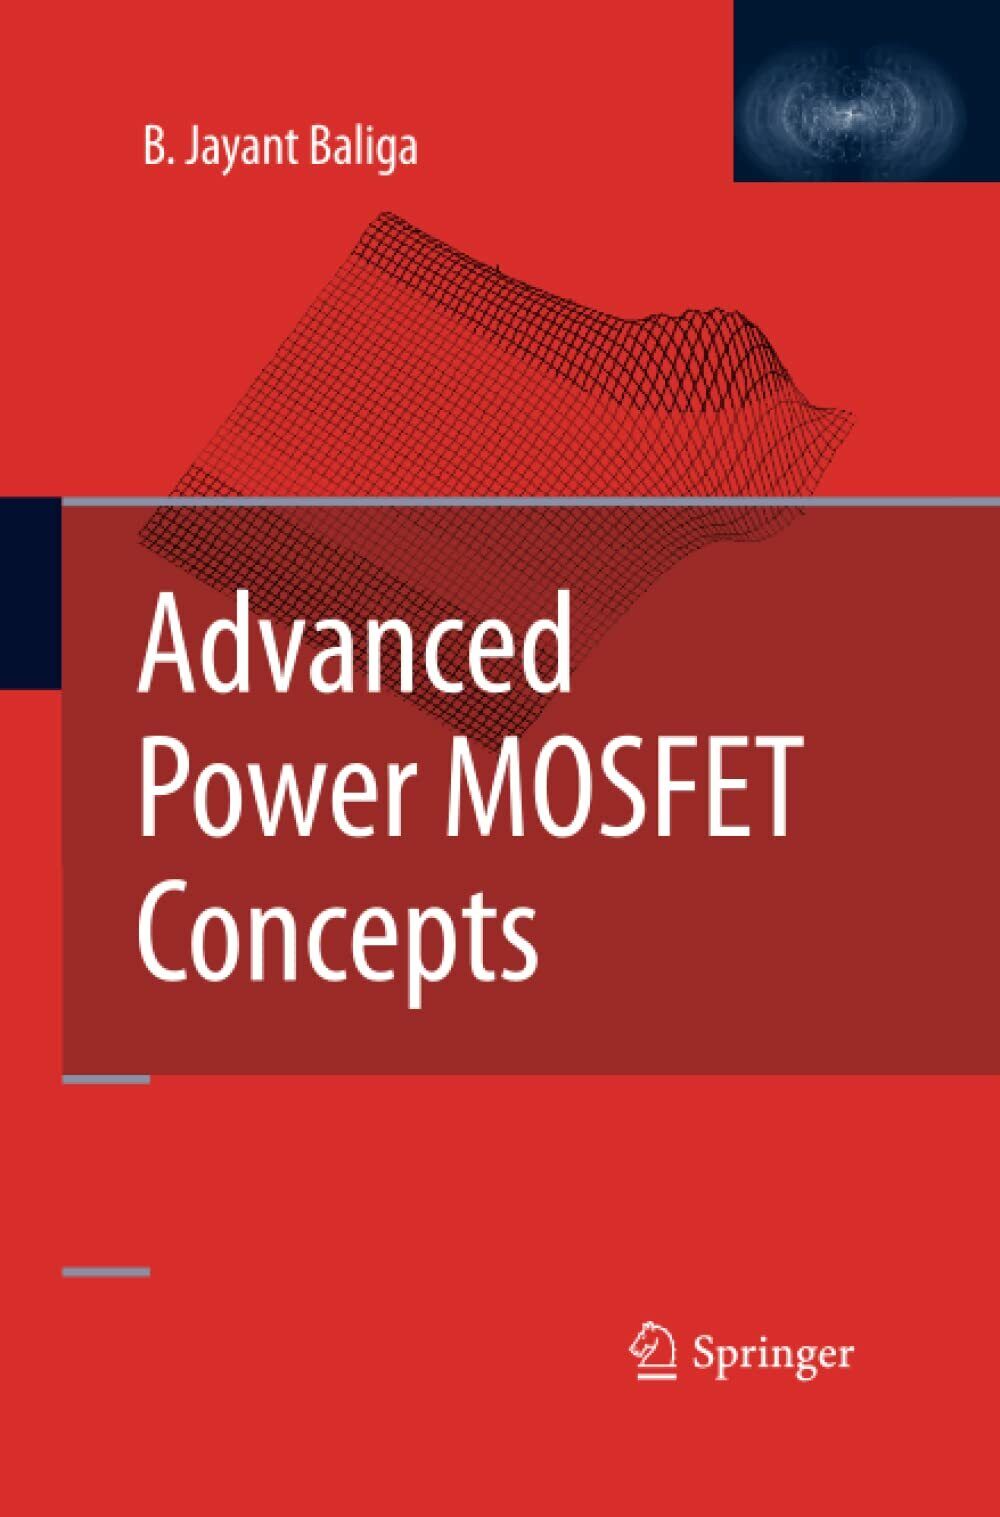 Advanced Power MOSFET Concepts - B. Jayant Baliga - Springer, 2014